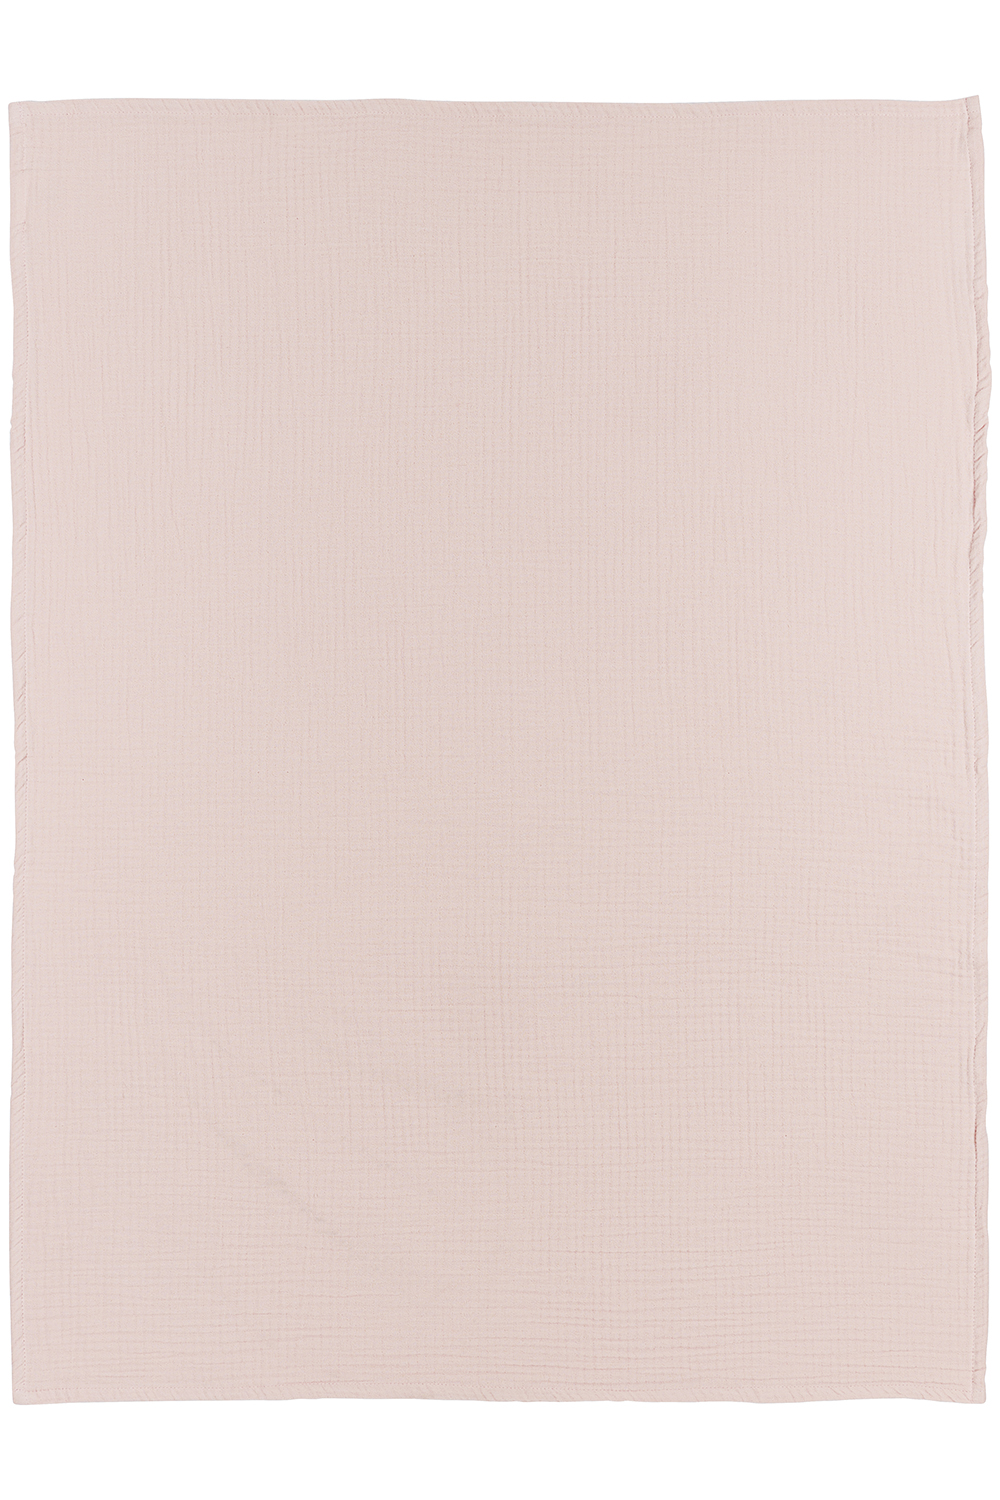 Wieglaken pre-washed hydrofiel Uni - soft pink - 75x100cm